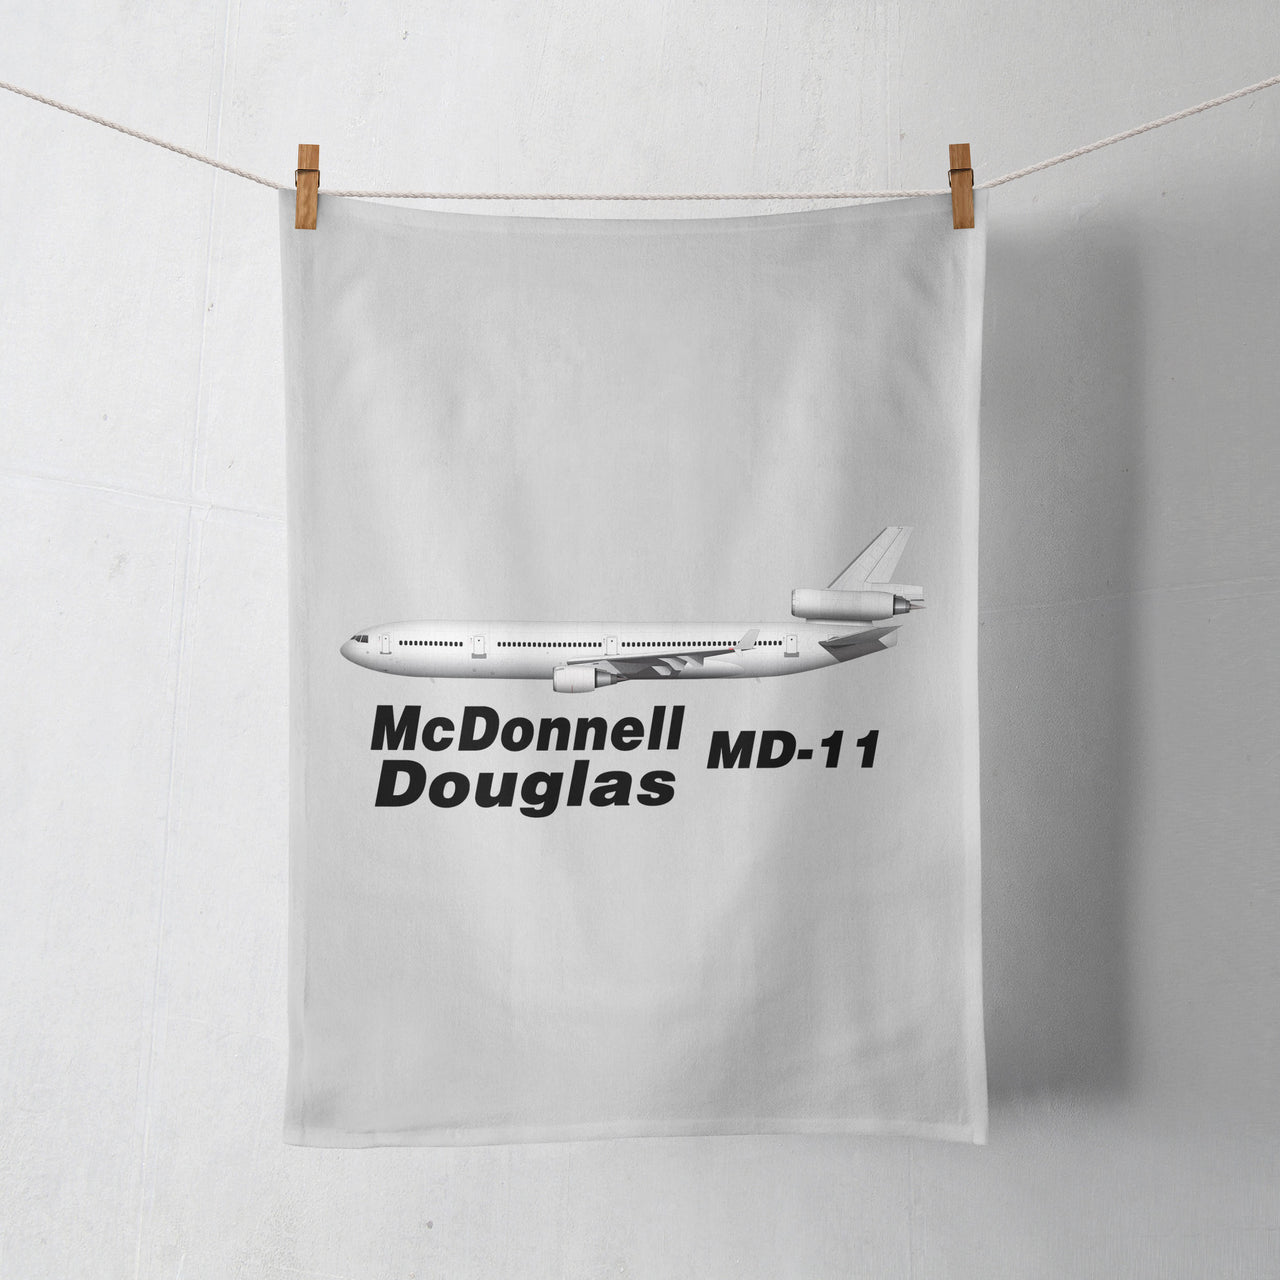 The McDonnell Douglas MD-11 Designed Towels